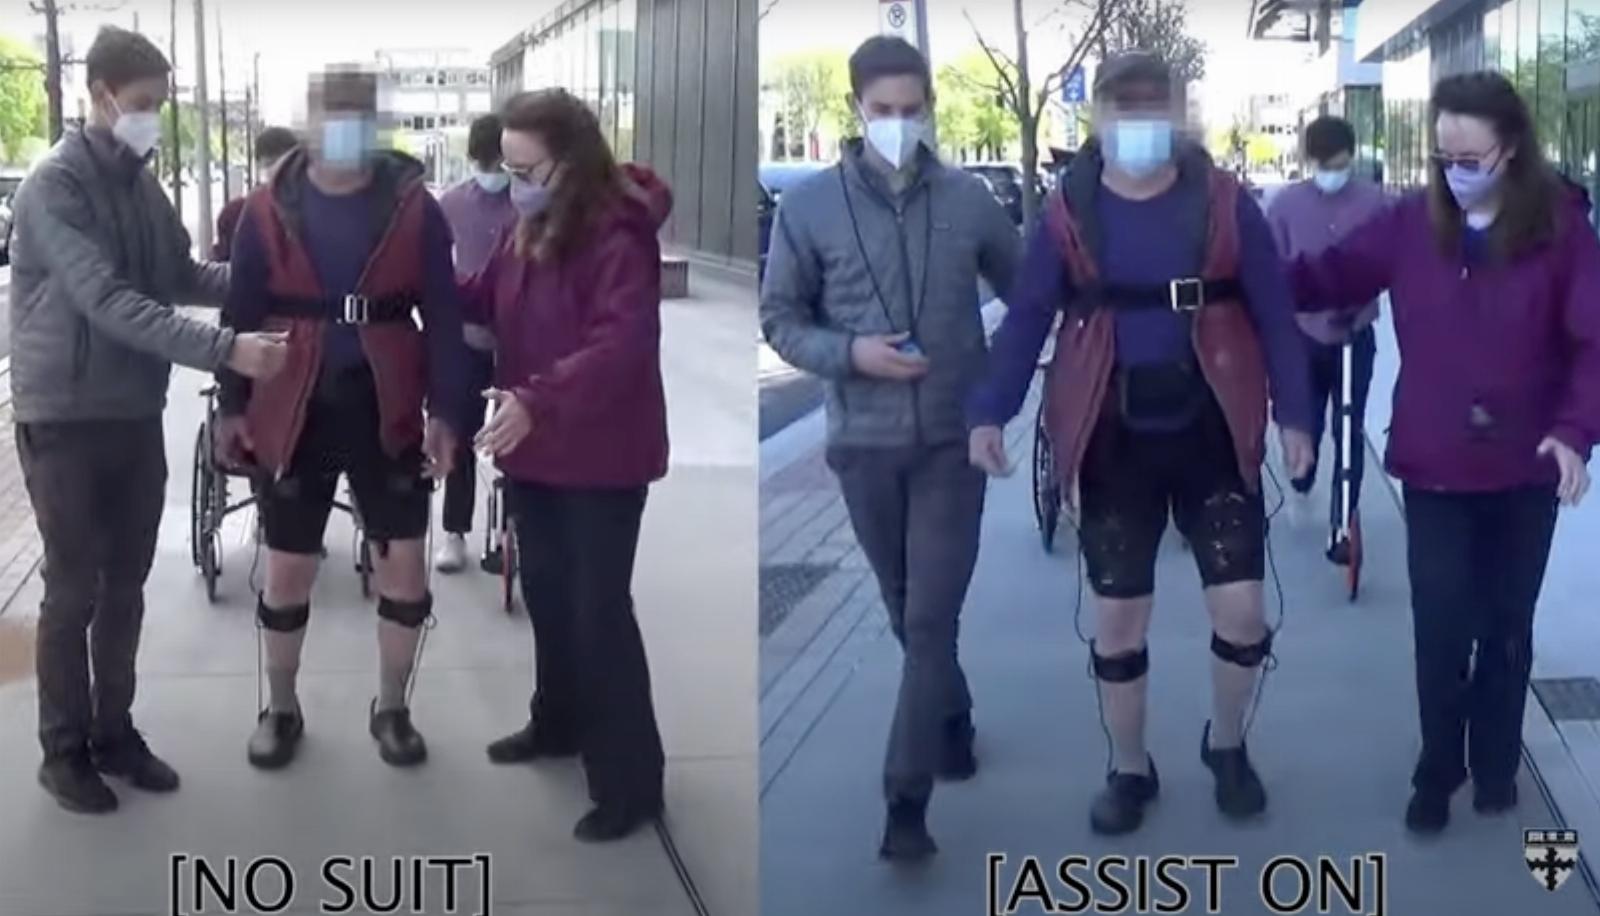 Harvard’s robotic exoskeleton can improve walking, decrease falls in people with Parkinson’s